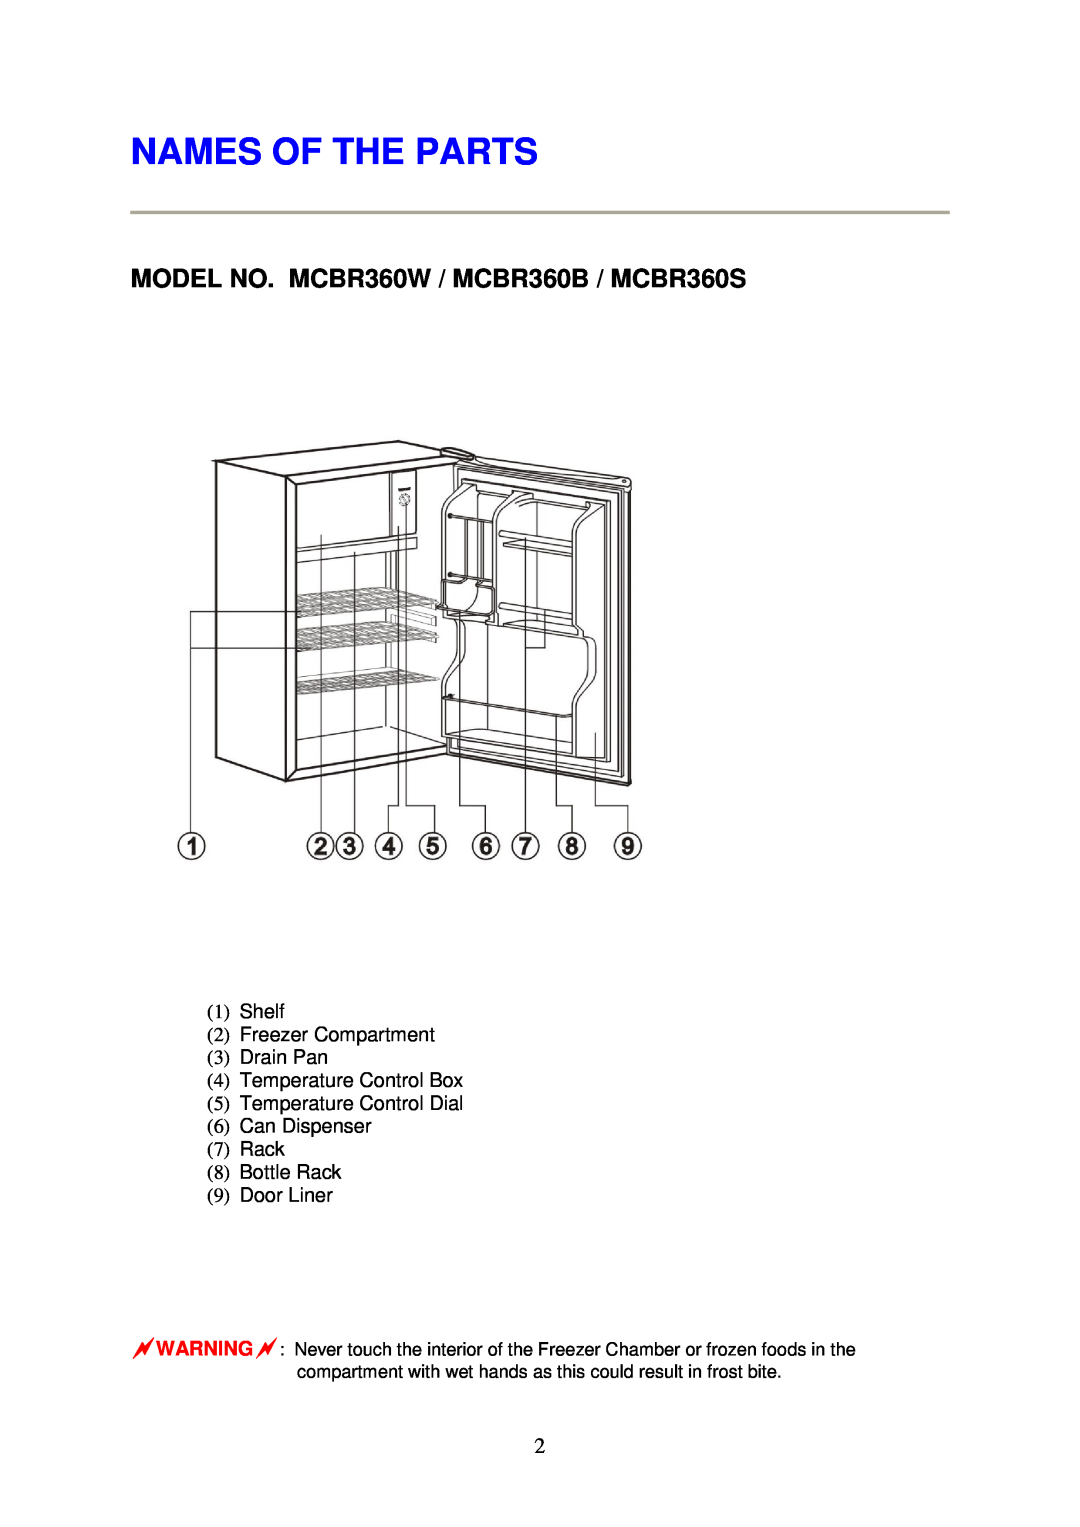 Magic Chef instruction manual Names Of The Parts, MODEL NO. MCBR360W / MCBR360B / MCBR360S 